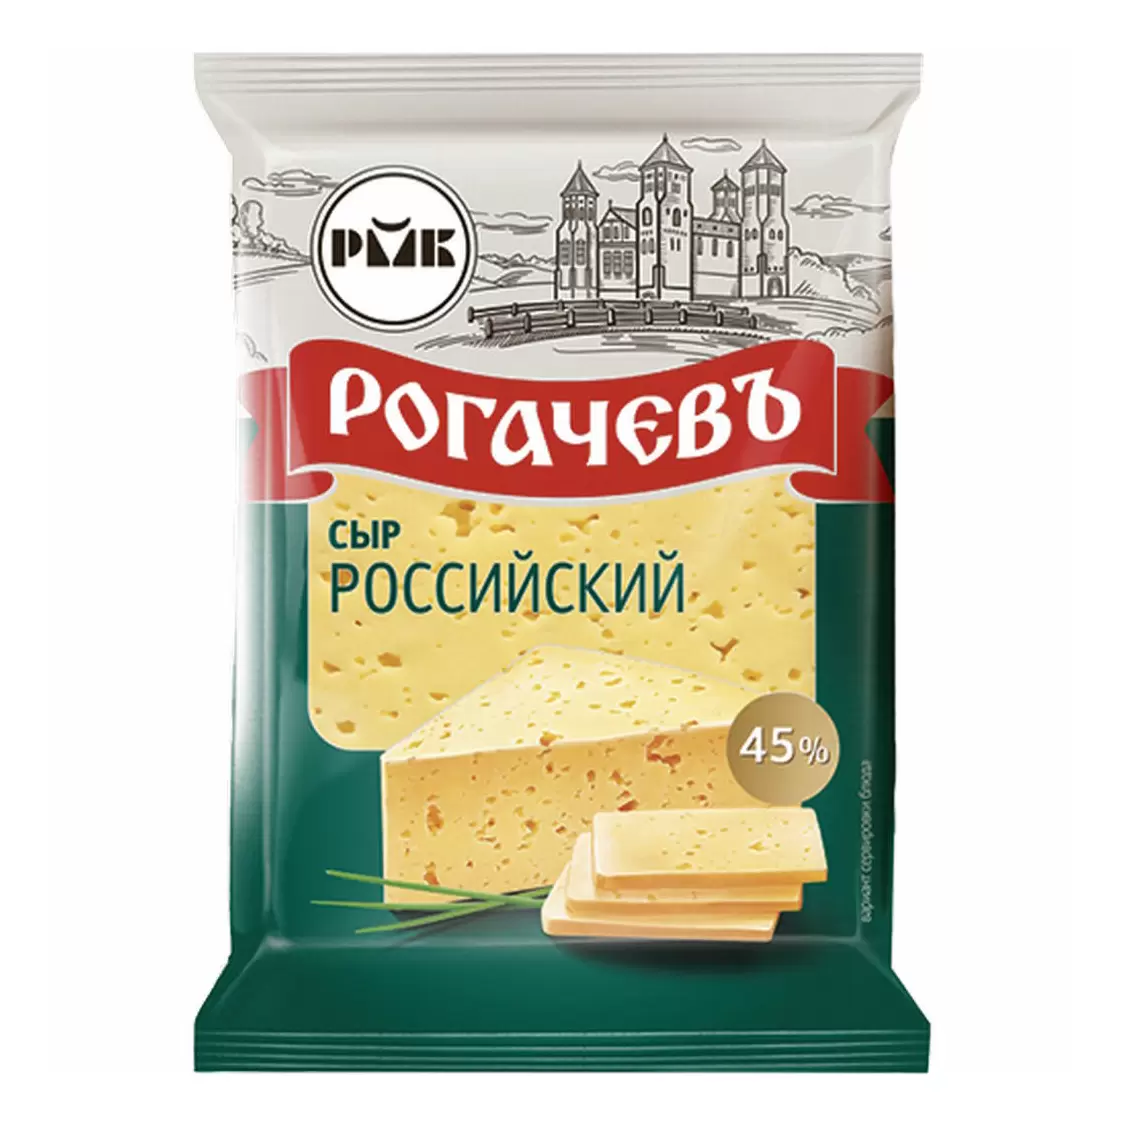 Сыр РОССИЙСКИЙ "Рогачевъ" 45%, 500гр.